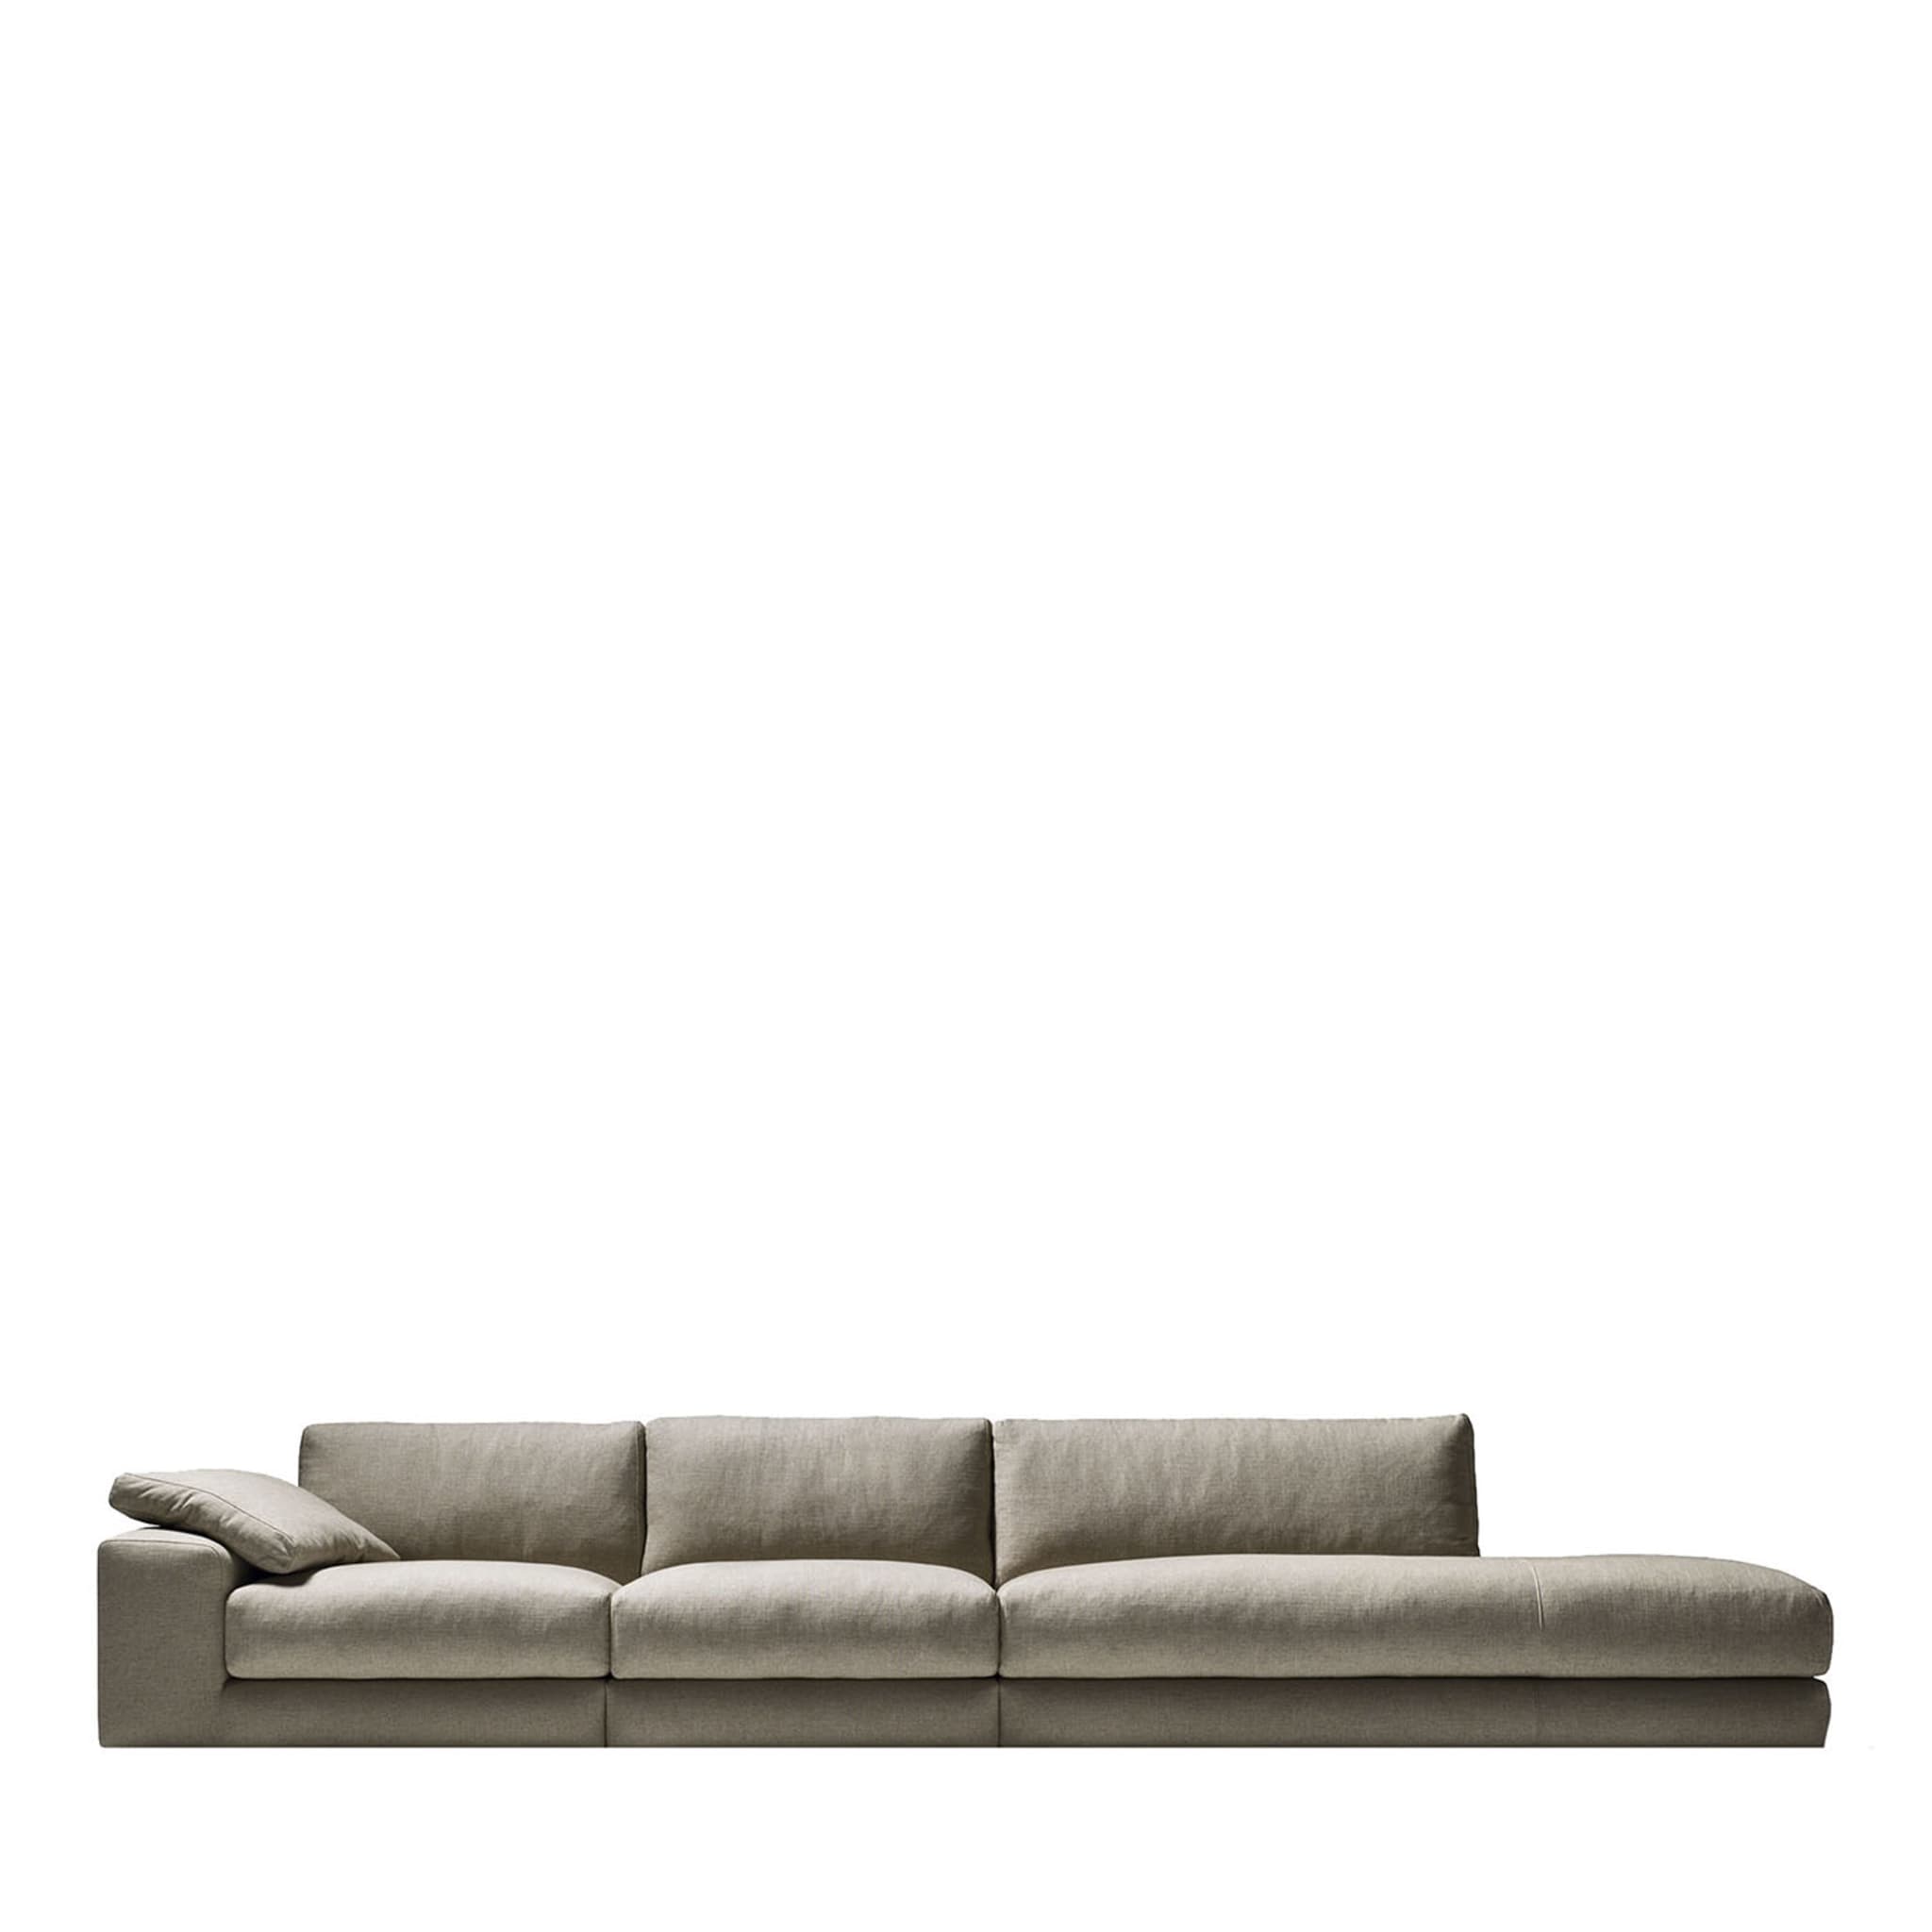 Dante Modular Beige Sofa - Main view